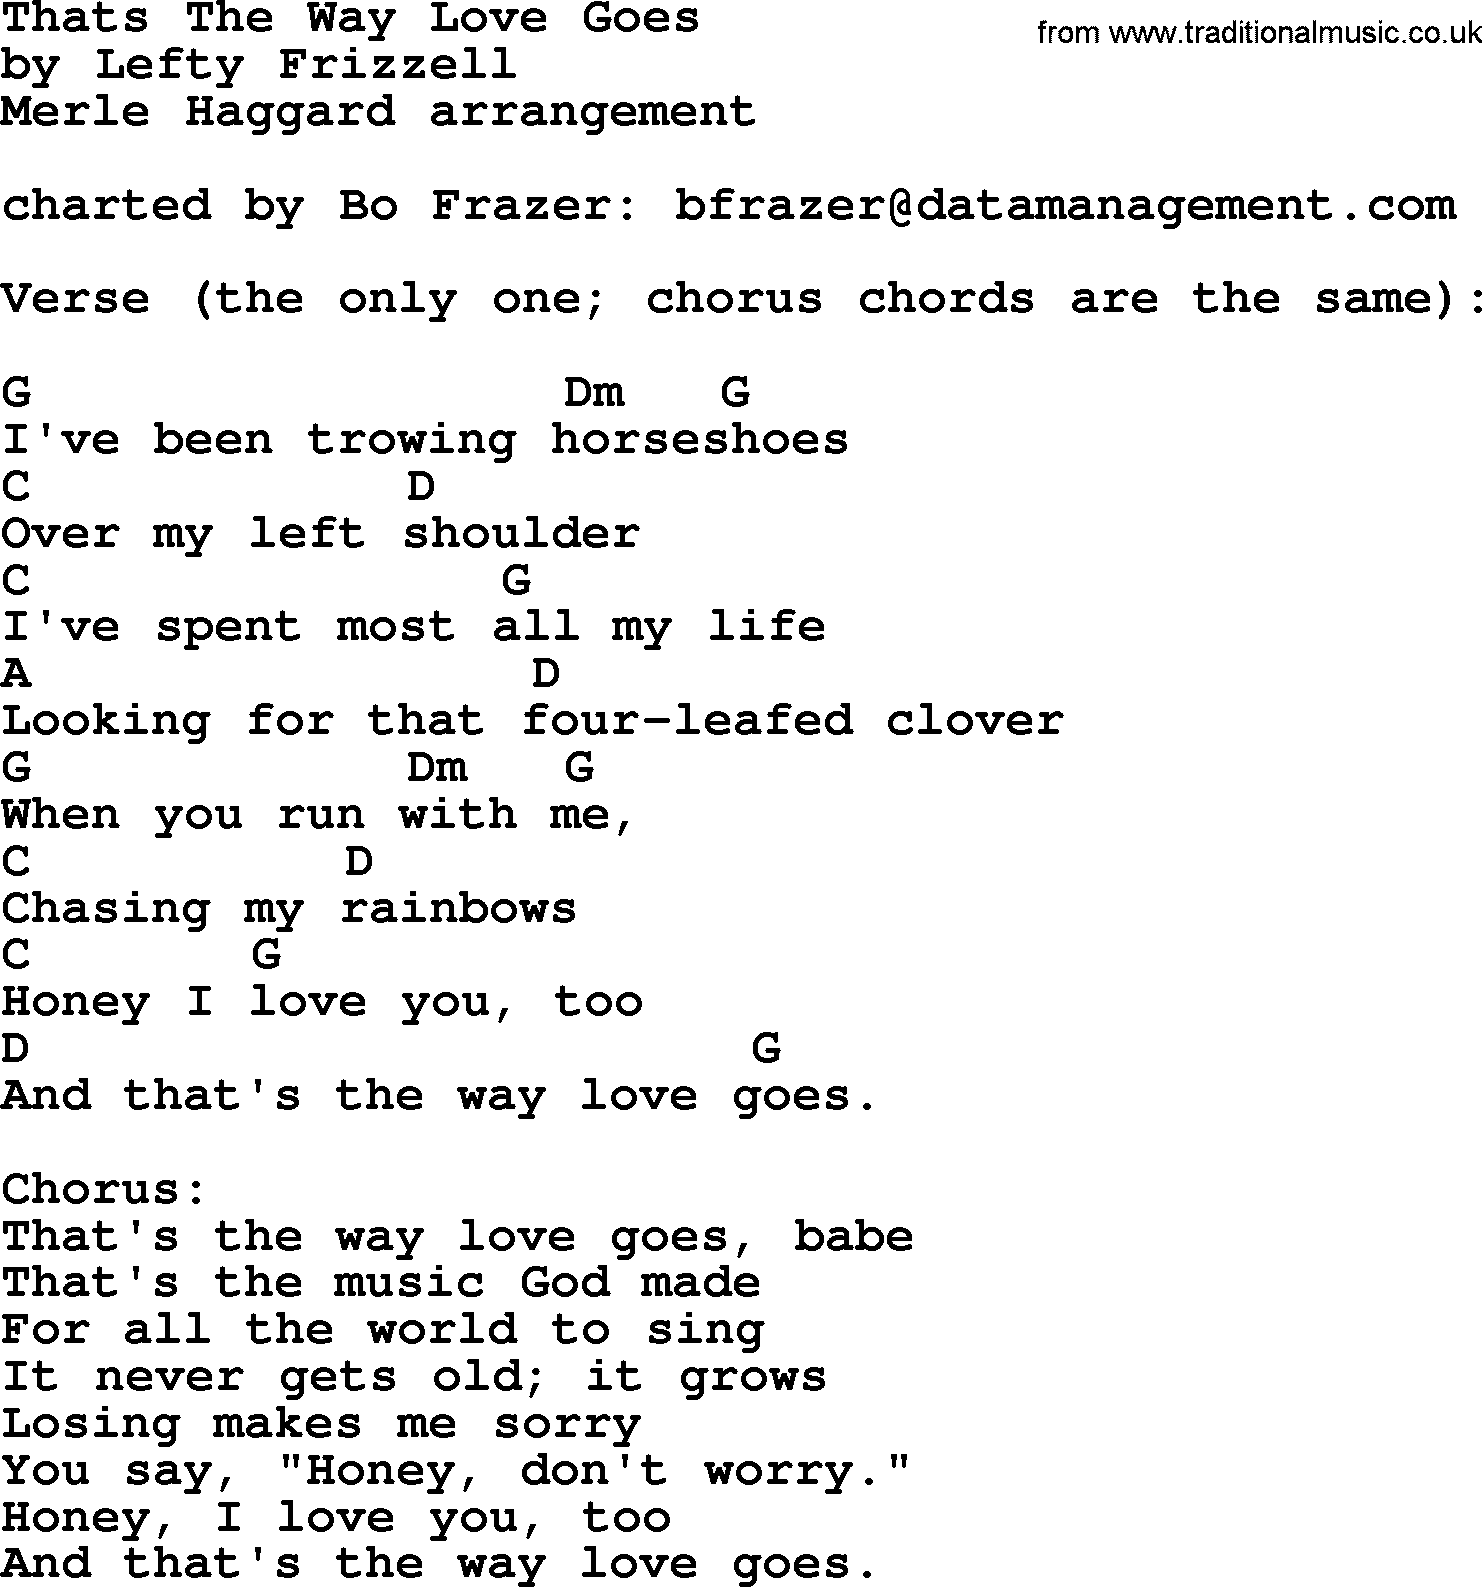 Merle Haggard song: Thats The Way Love Goes, lyrics and chords